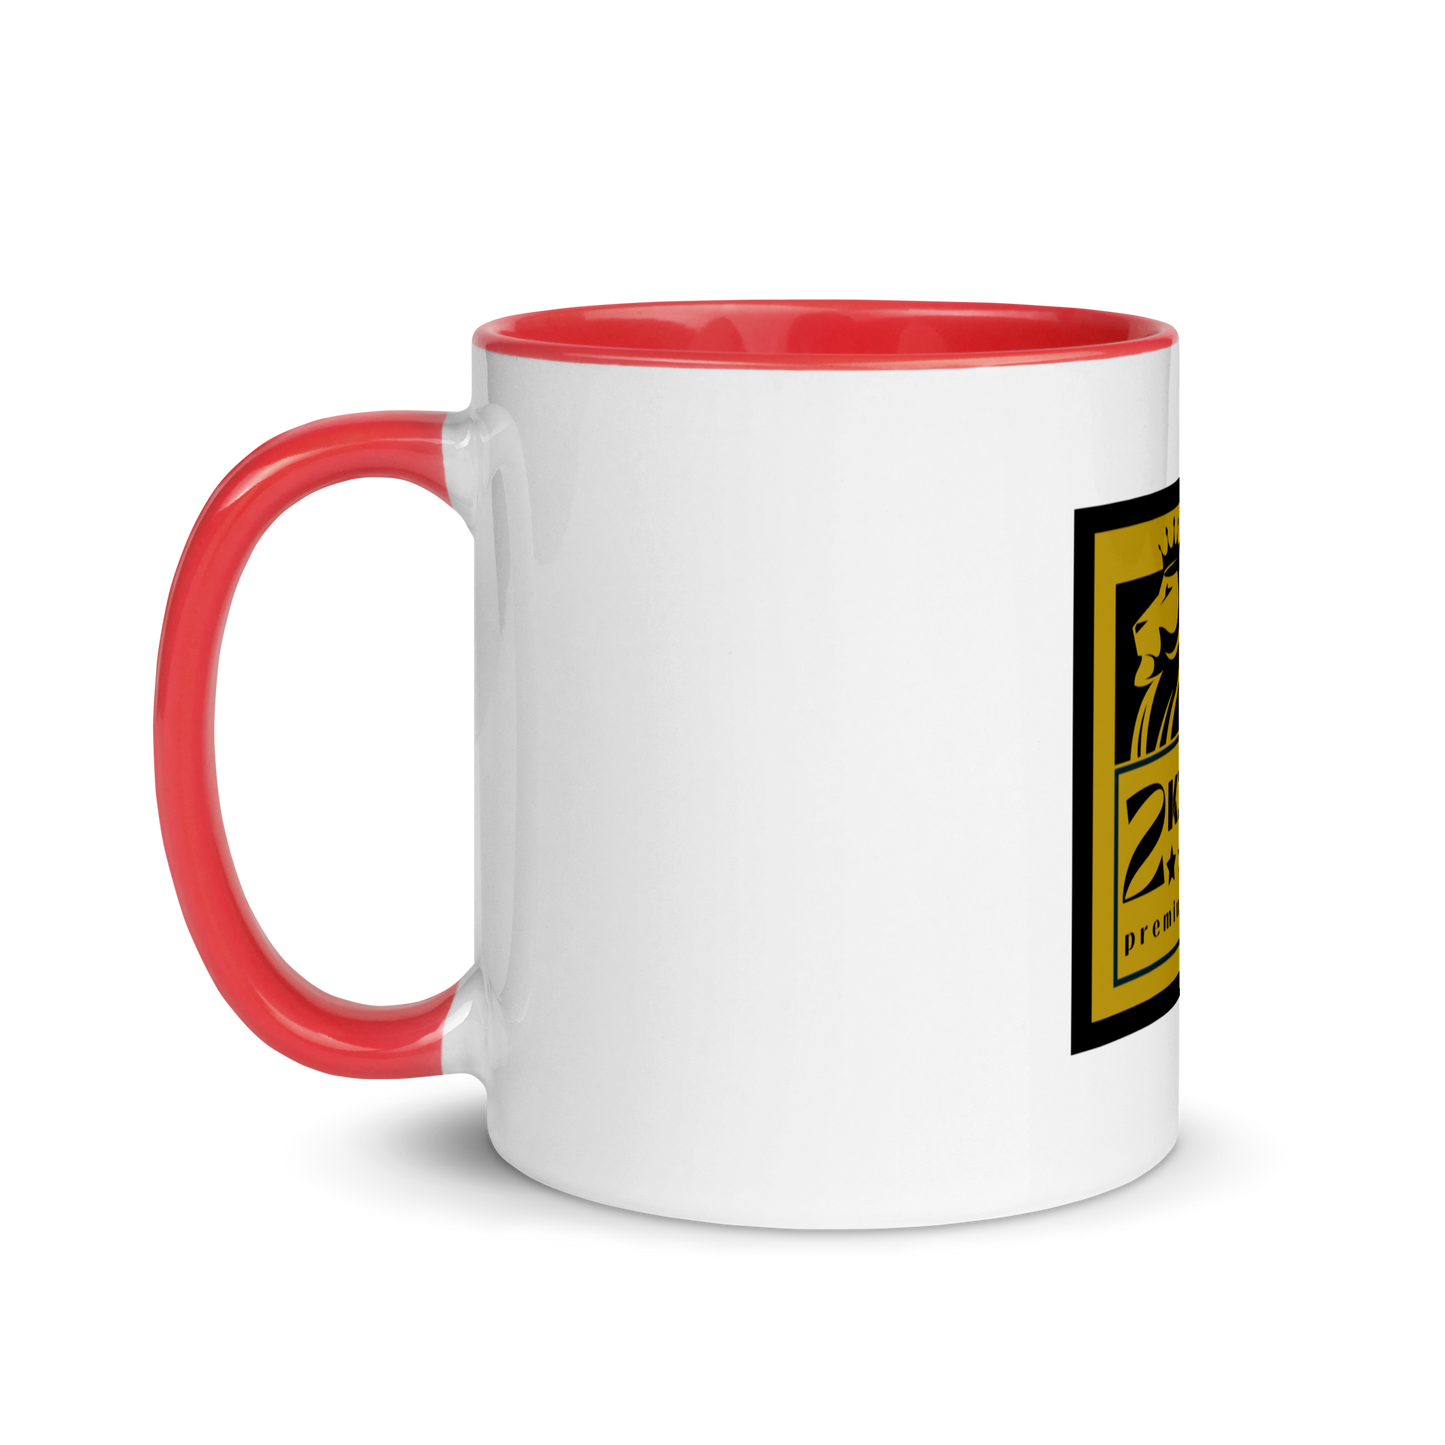 2 Kings Coffee - Branded Mug with Color Inside